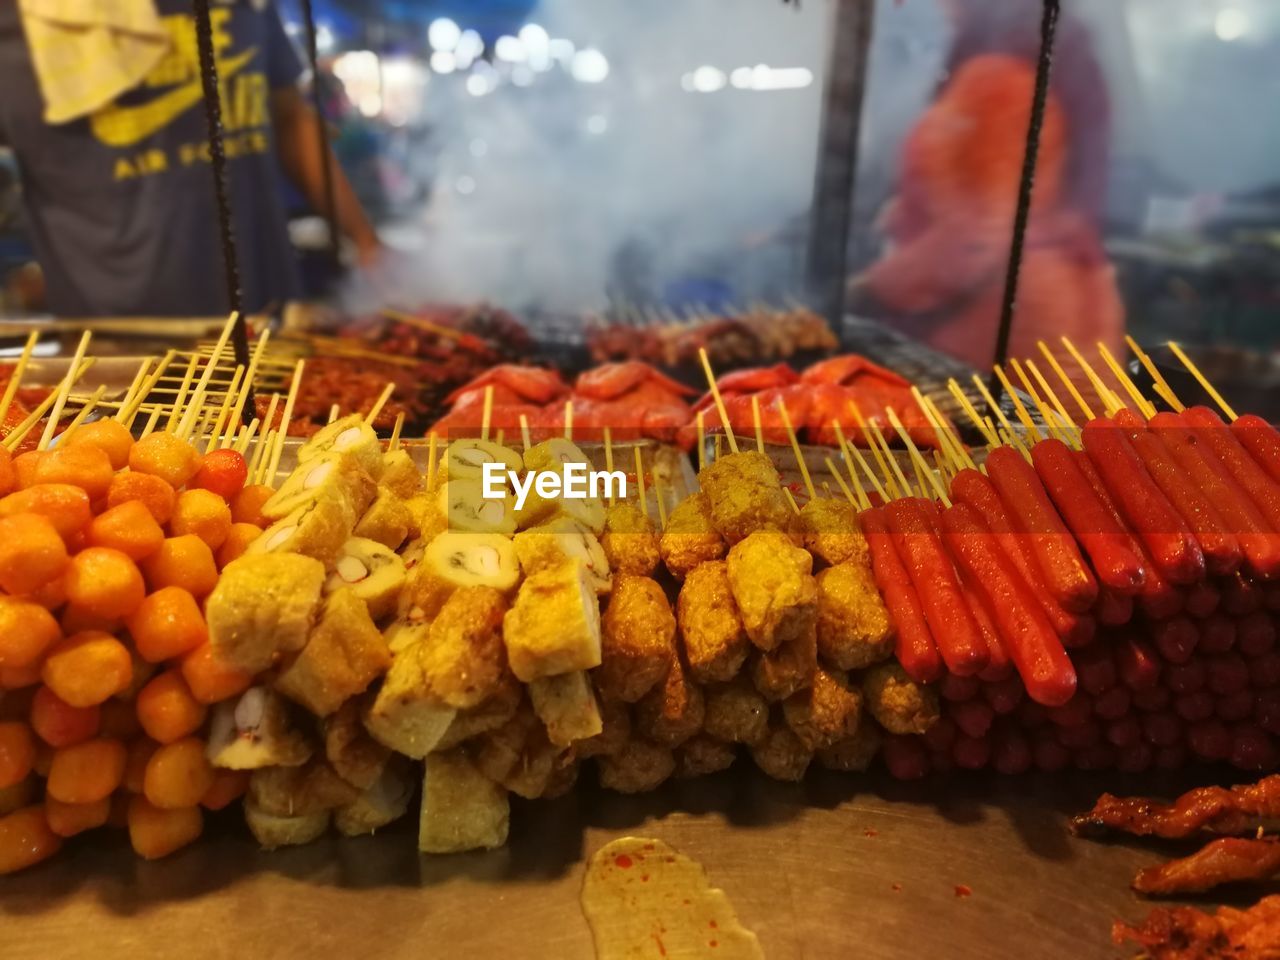 Night market atmosphere with smoky grilled food menu